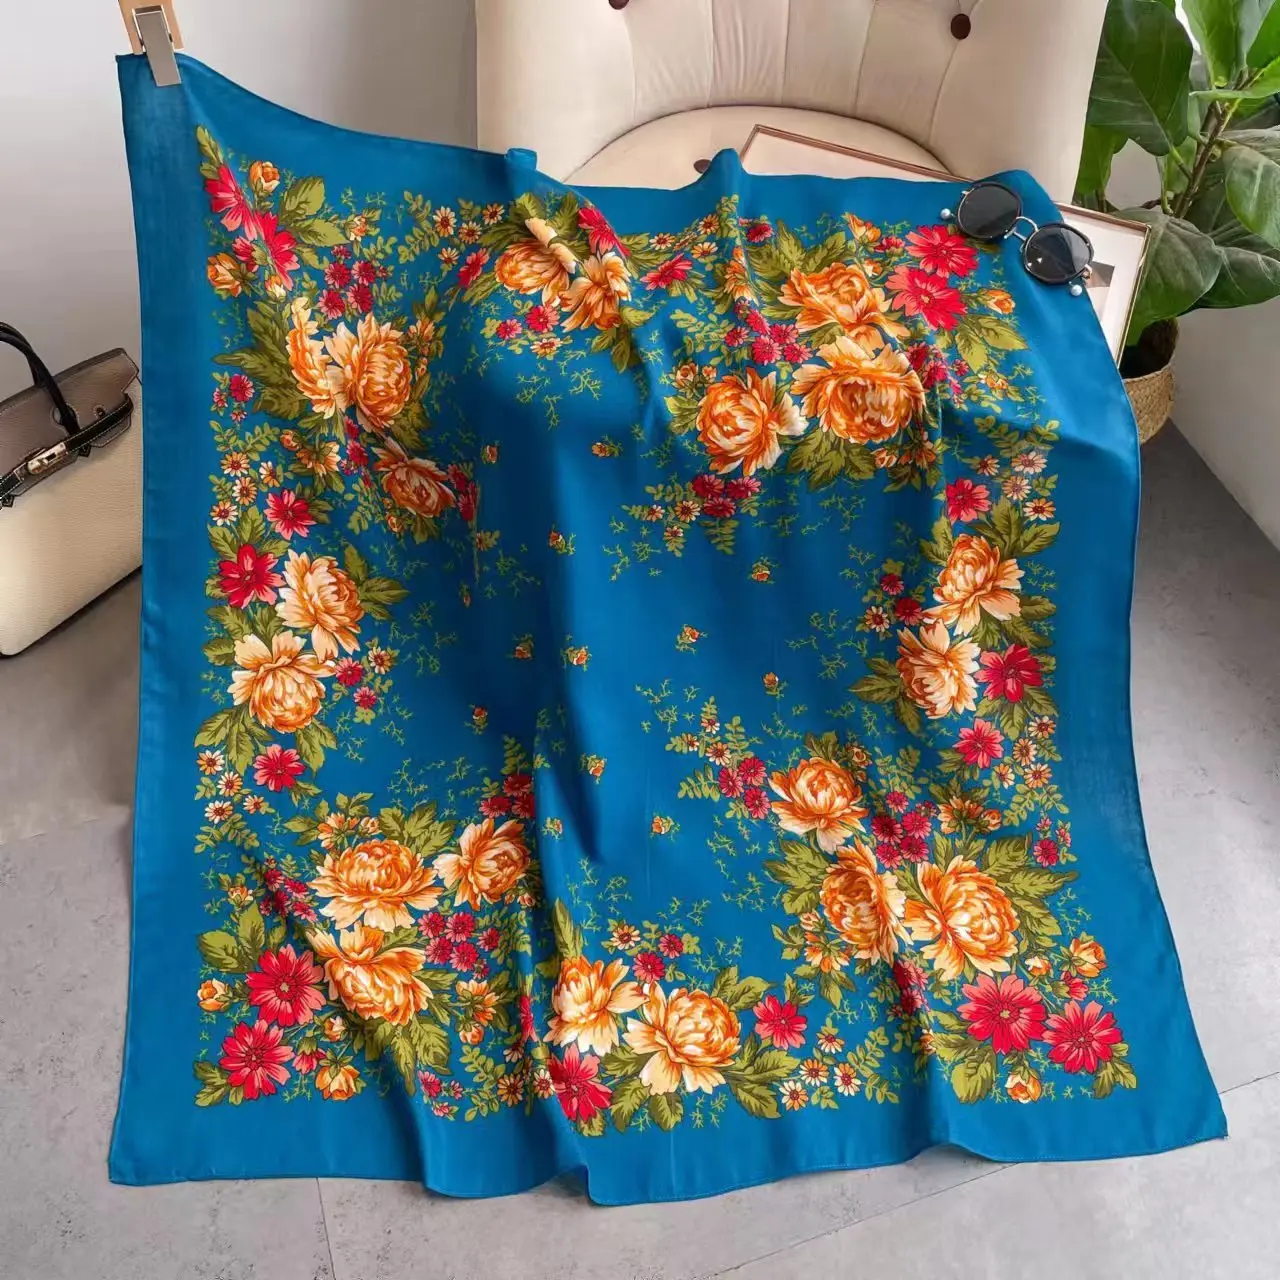 110*110cm National Russian Scarf Luxury Women Floral Print Square Bandana Traditional Ukrainian Shawls Lady Beach Towel Scarves